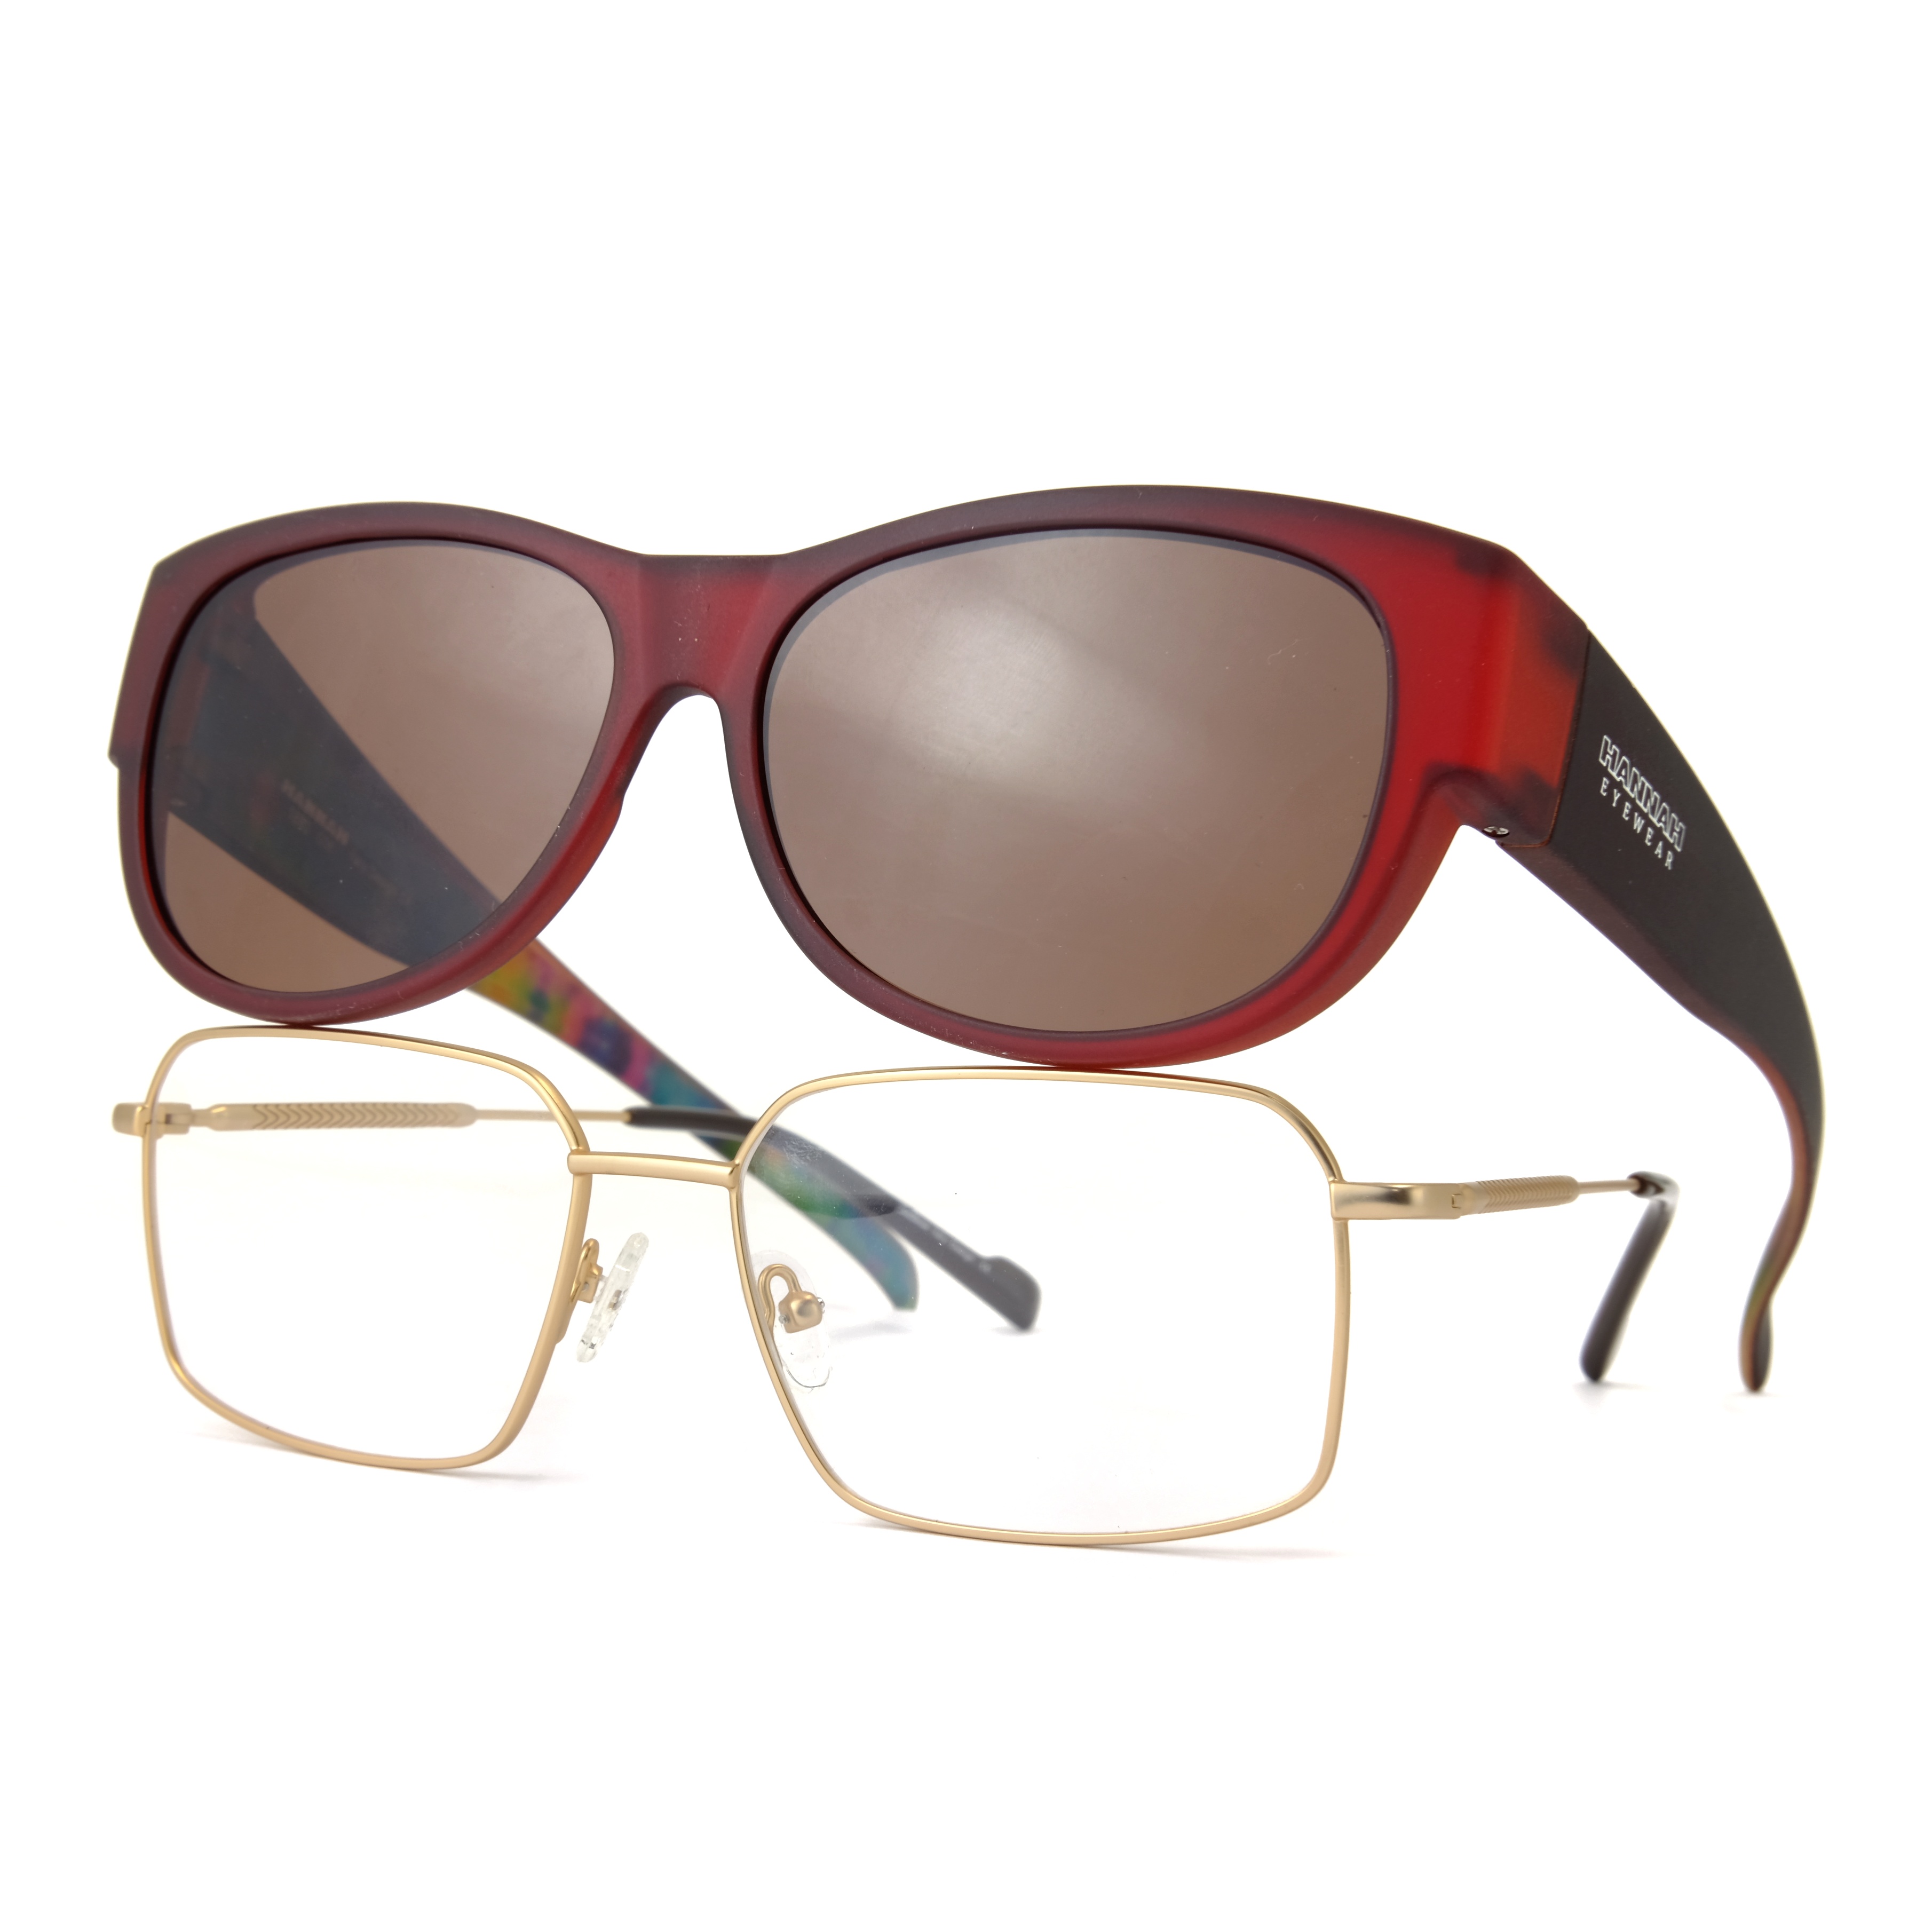 Custom Fit over riding Sun glasses river Fitover Women Sunglasses Unisex oversized Square Shades